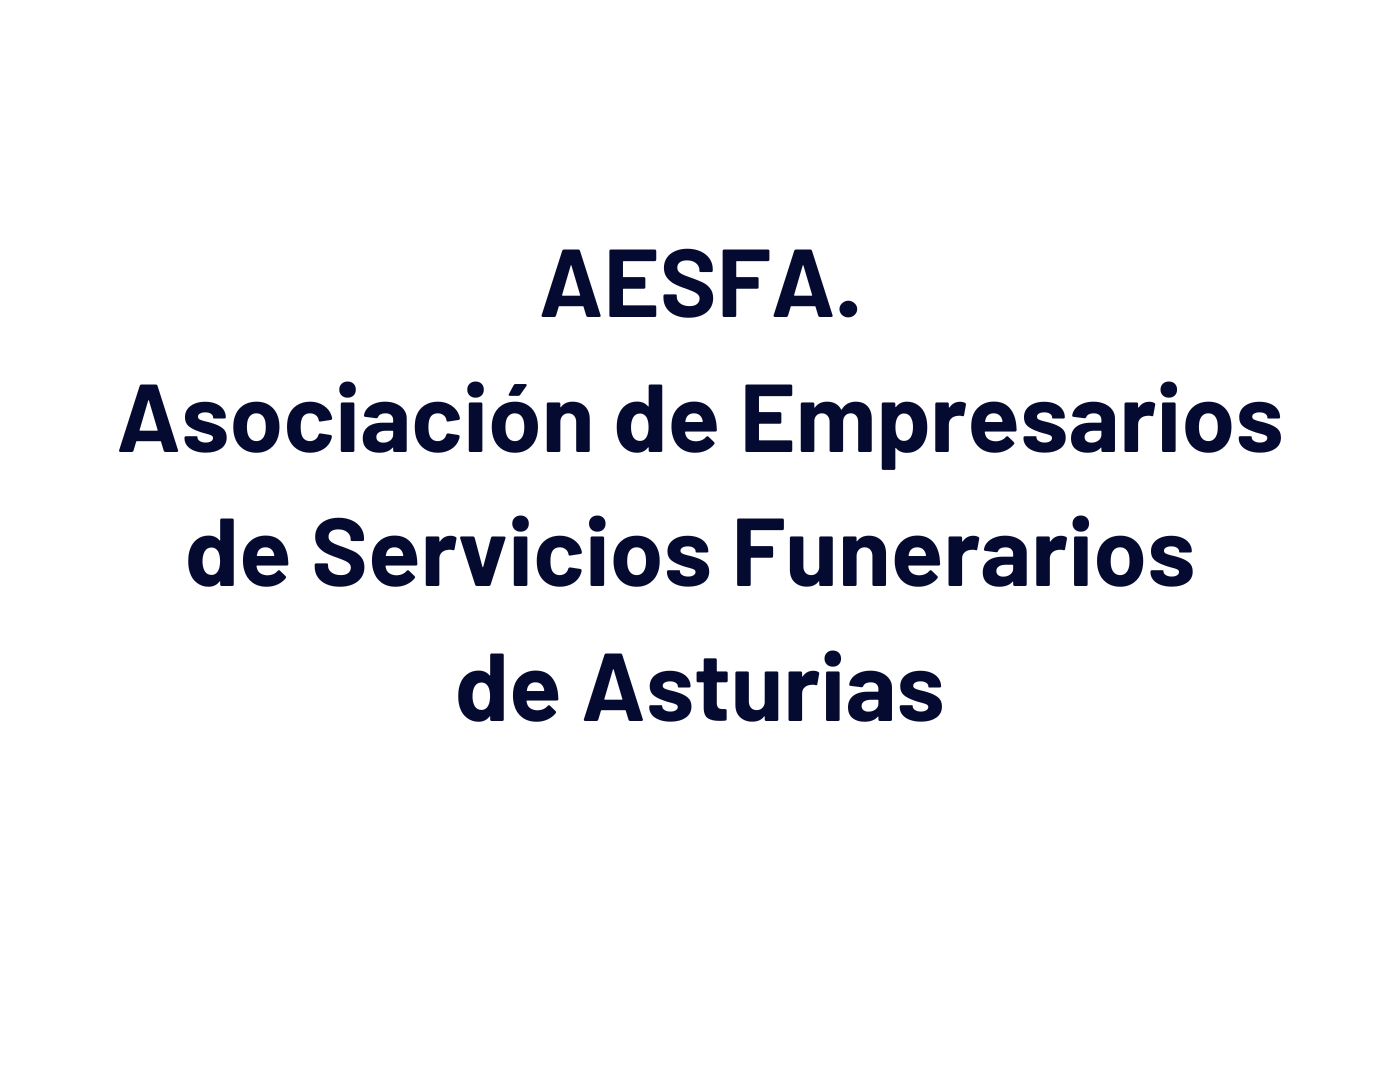 AESFA - Asociación de Empresarios de Servicios Funerarios de Asturias